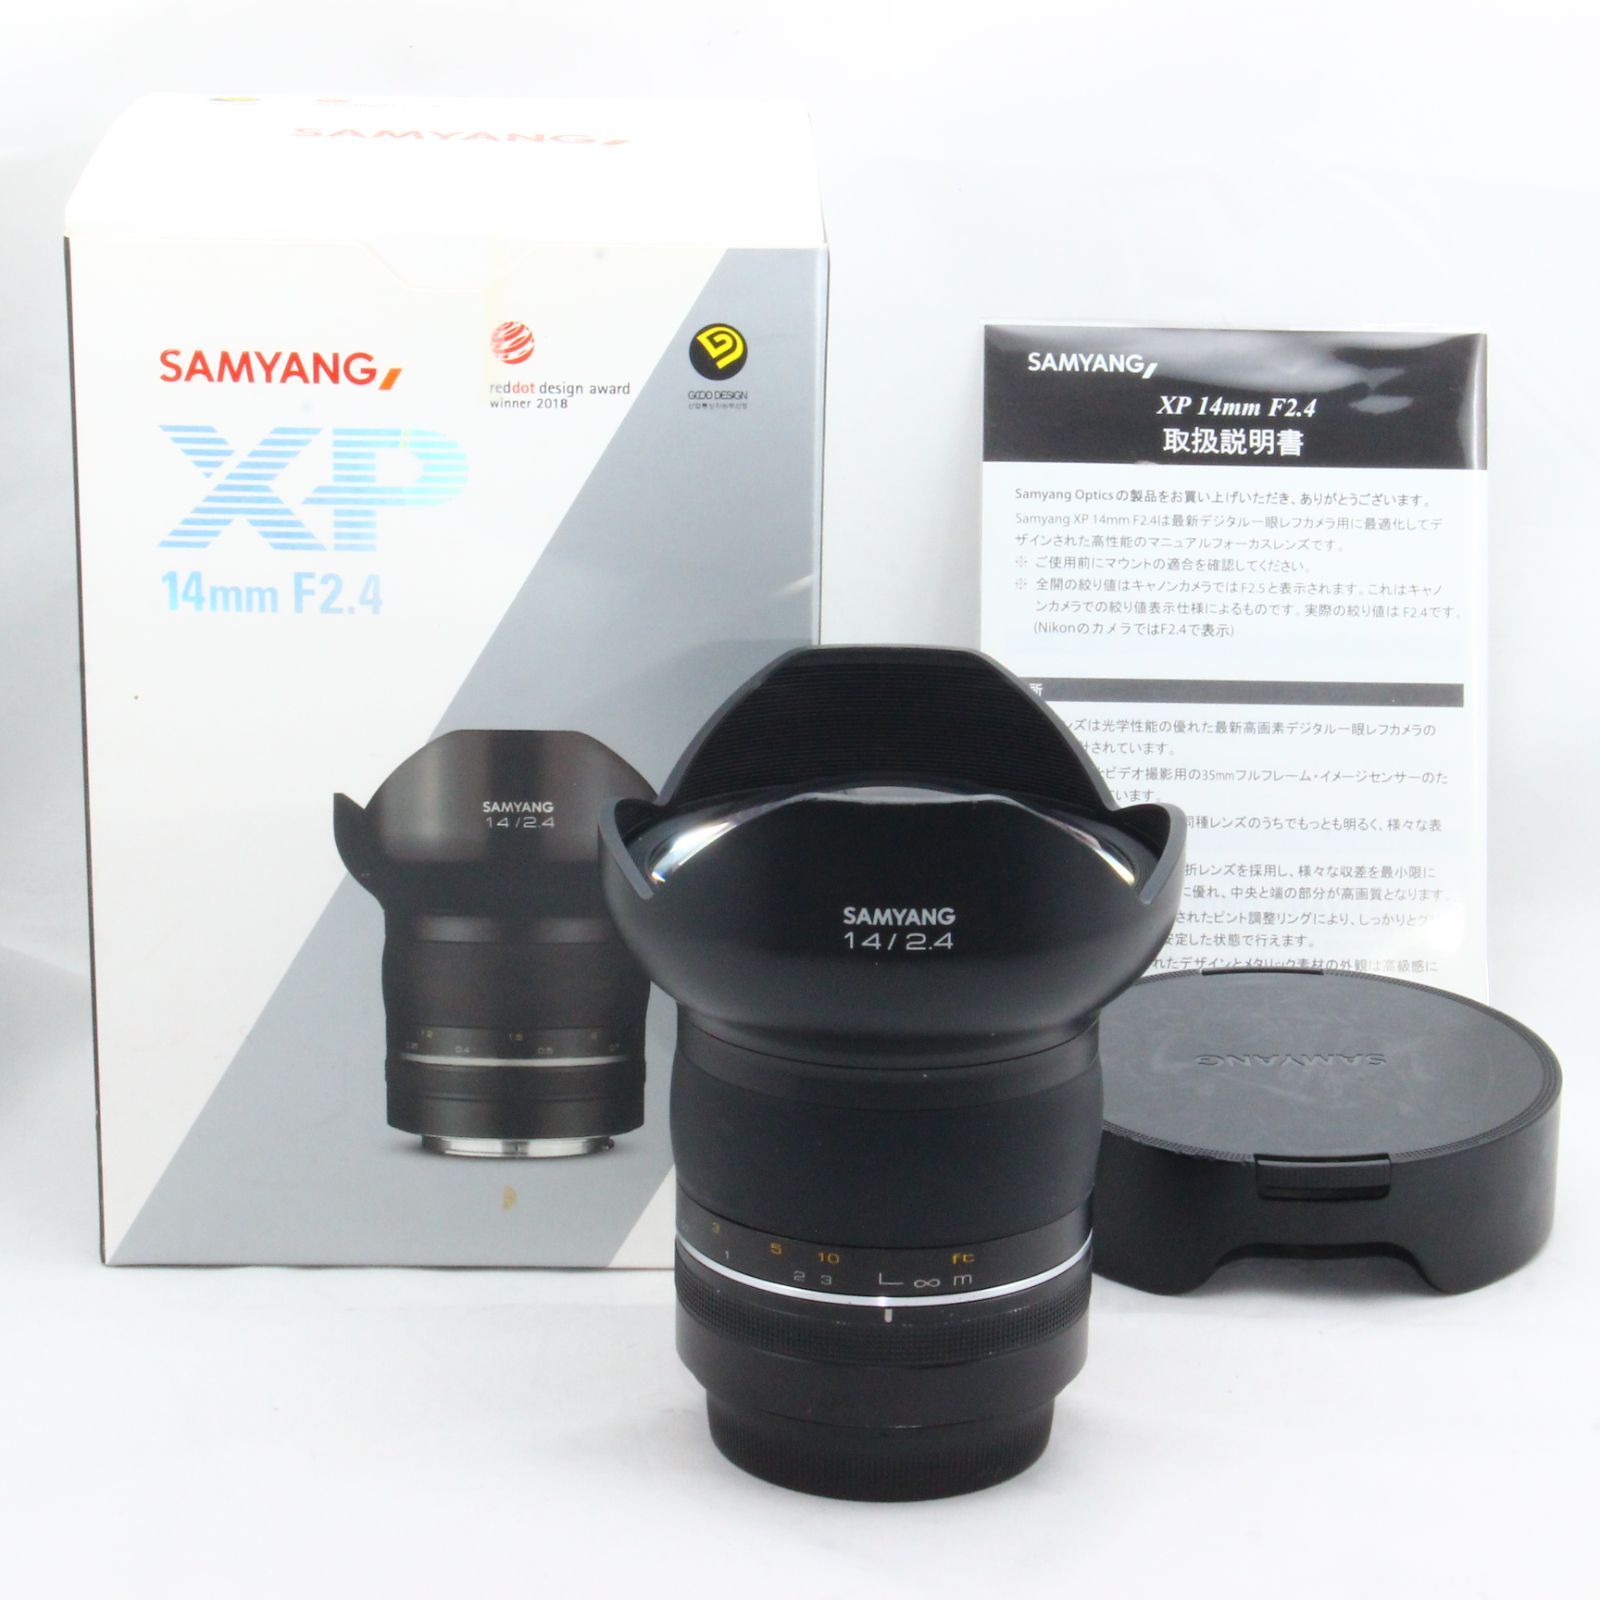 SAMYANG 単焦点広角レンズ XP 14mm F2.4 キャノンEF - M&T Camera